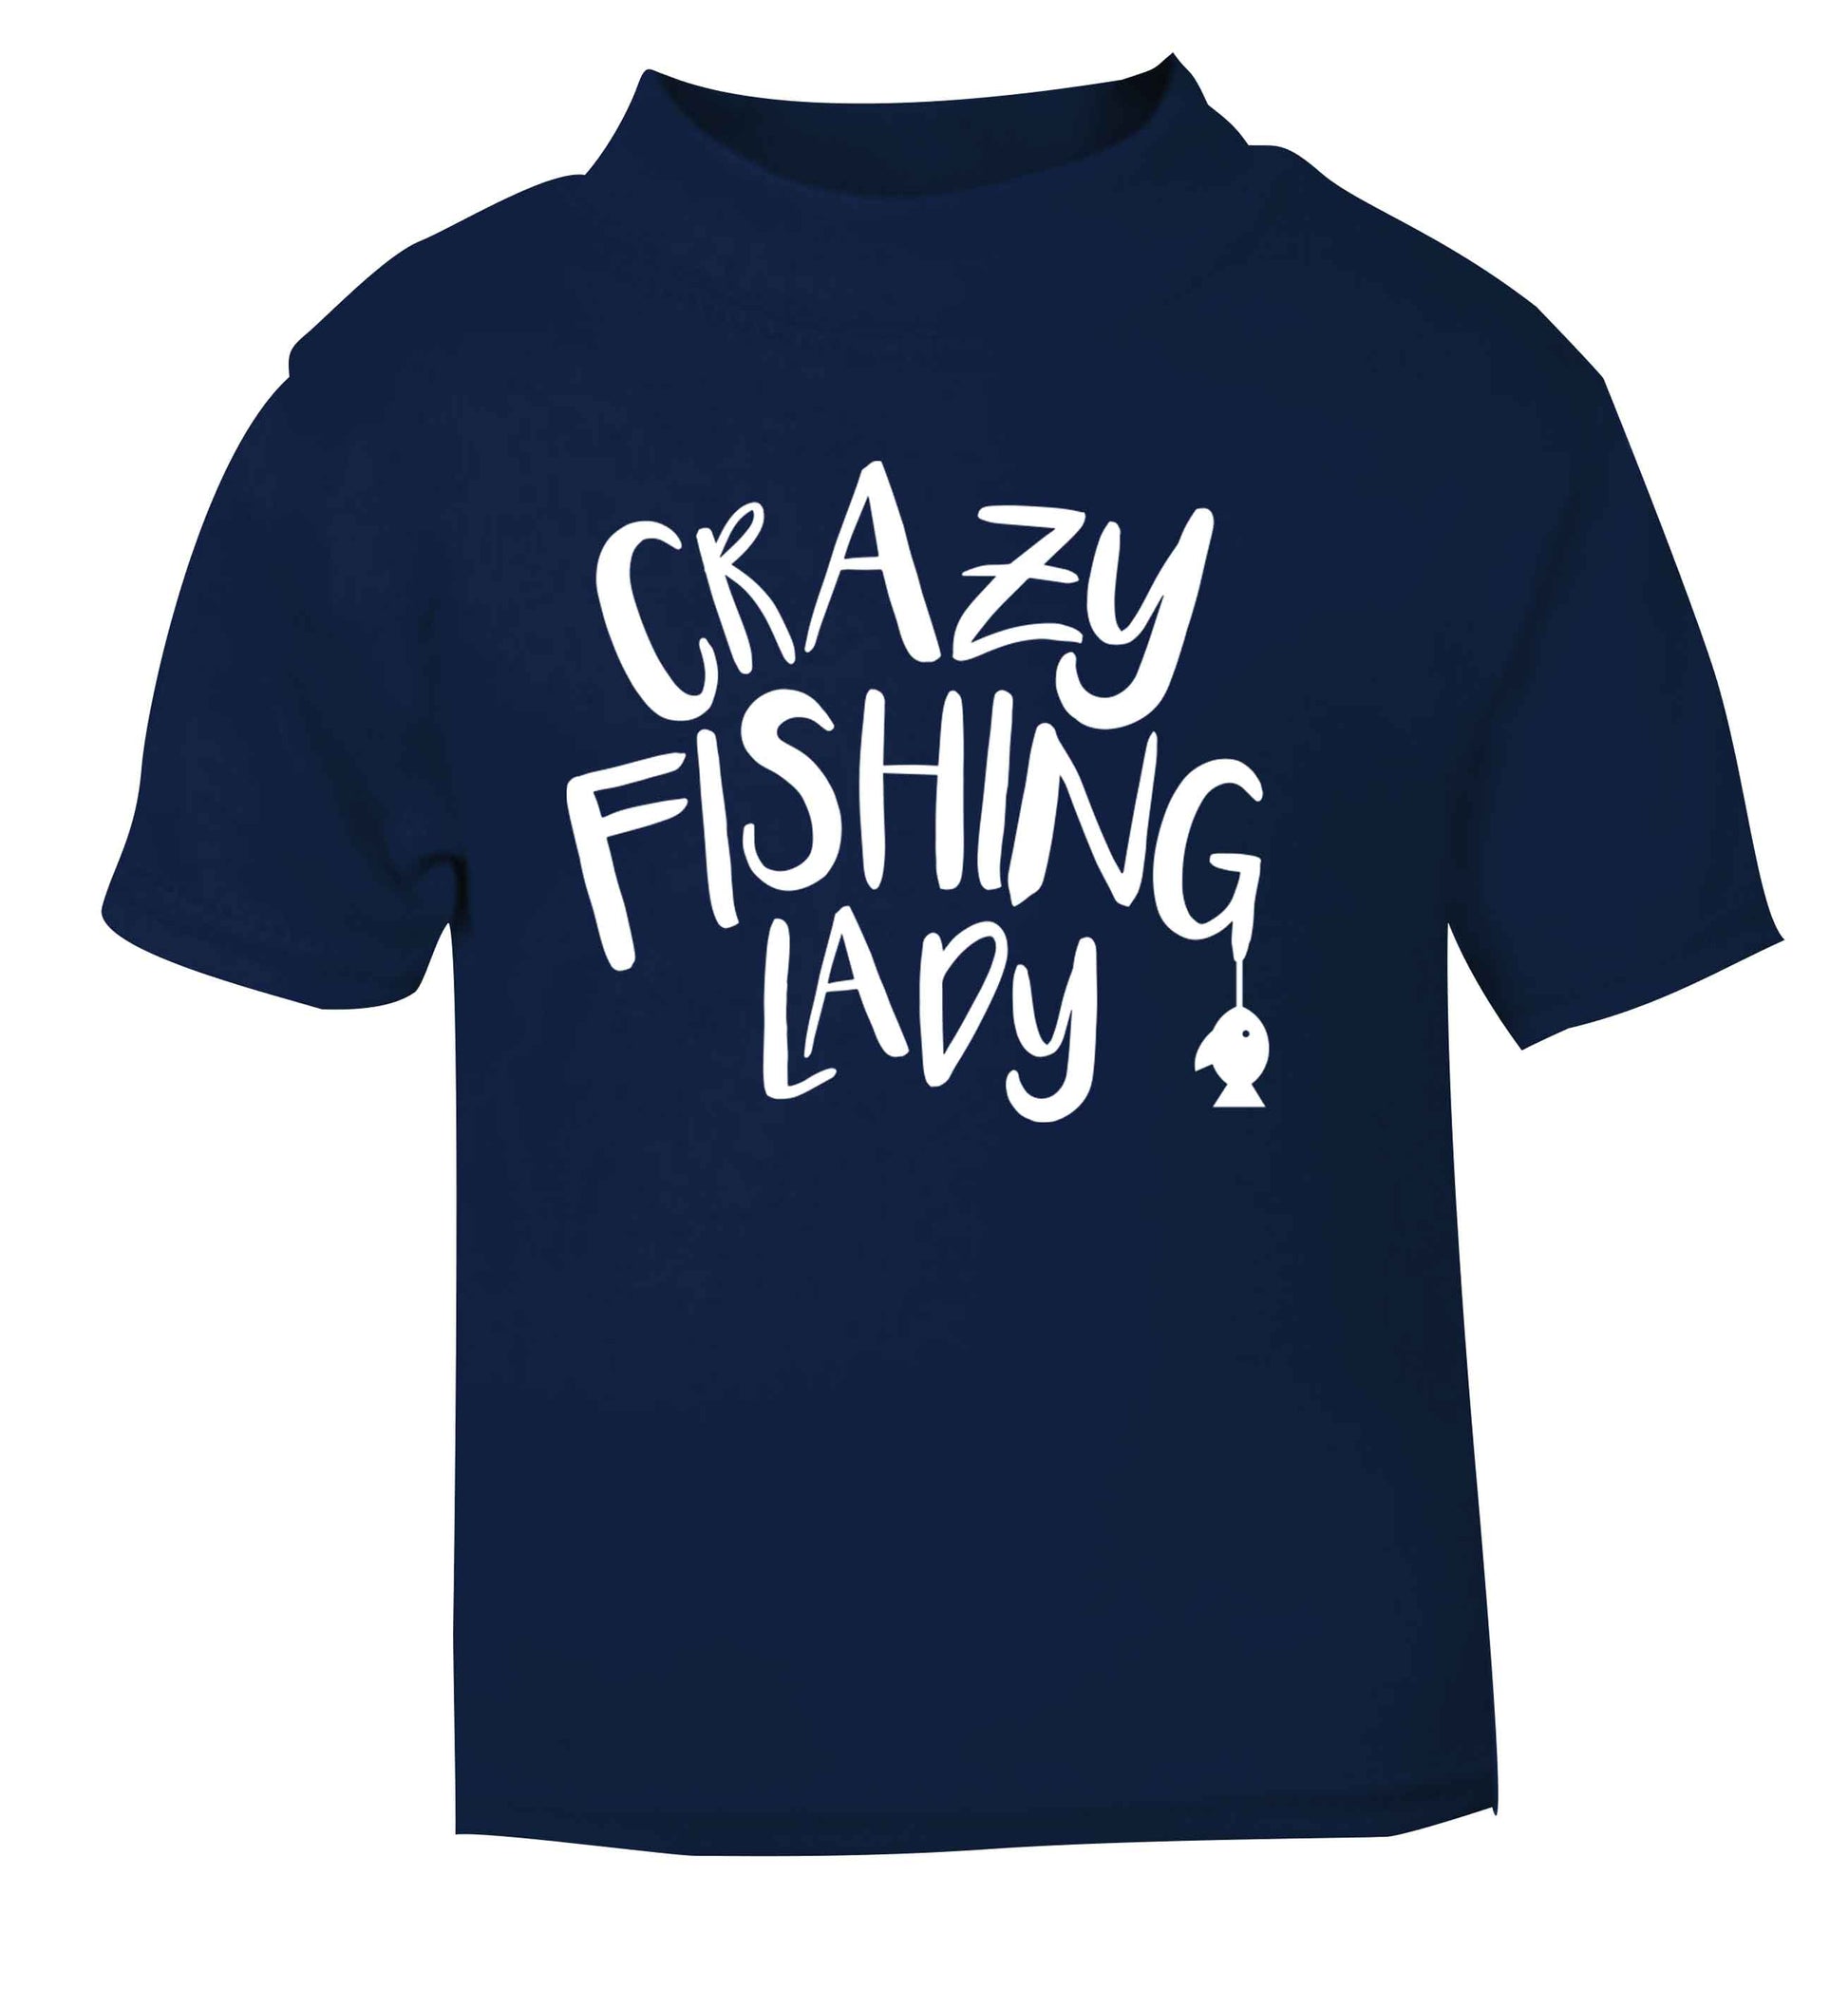 Crazy fishing lady navy Baby Toddler Tshirt 2 Years